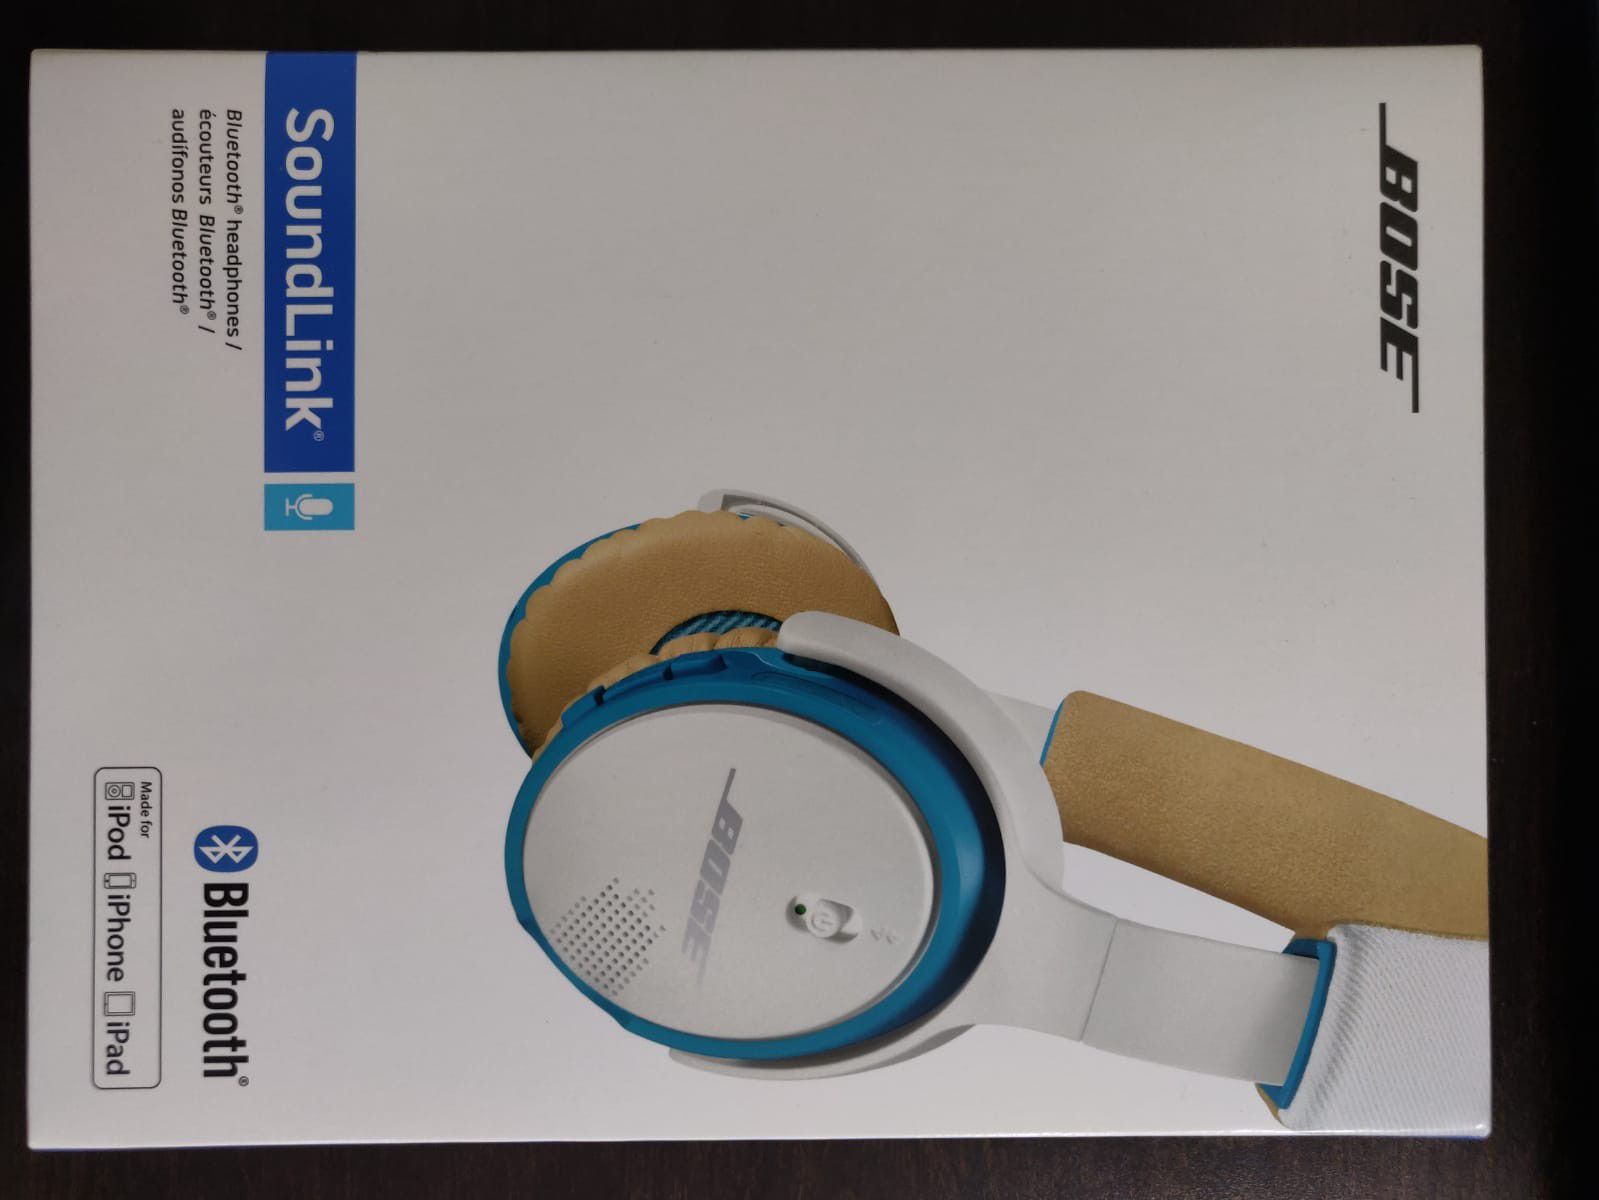 Bose Soundlink bluetooth headphones